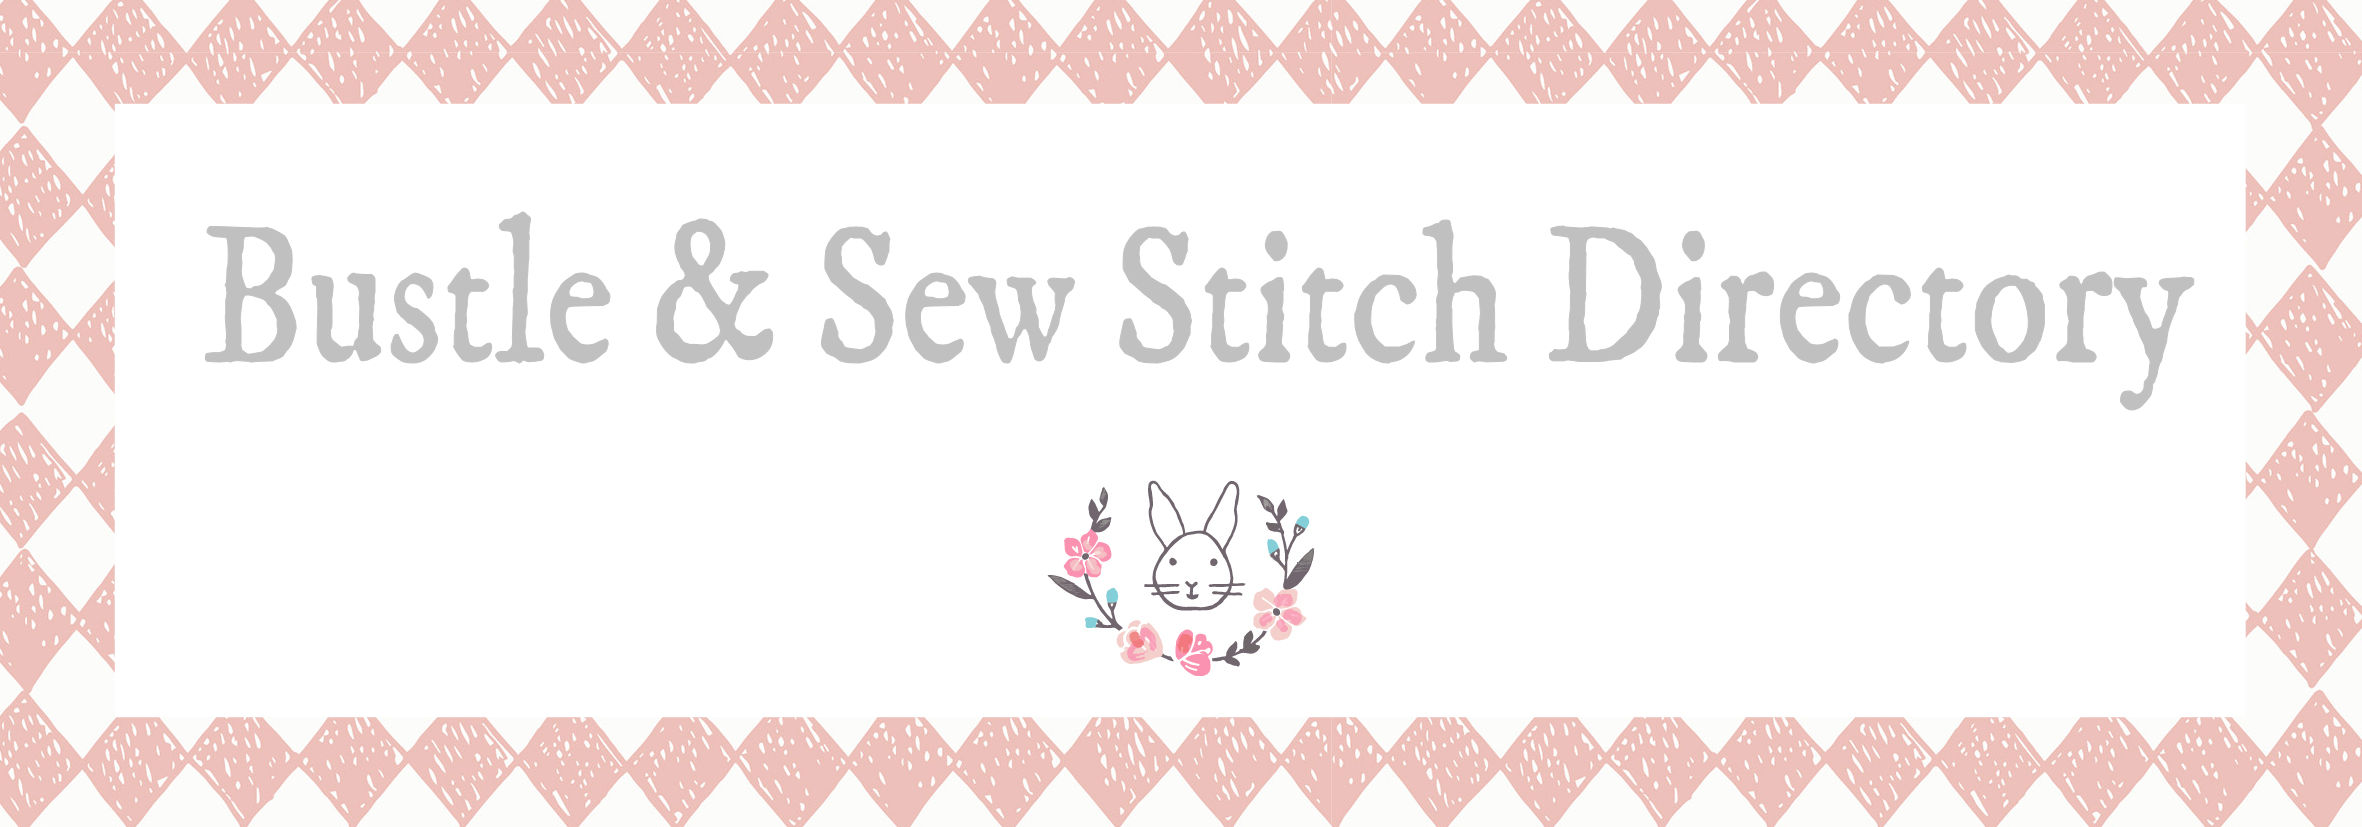 Bustle & Sew Stitch Directory